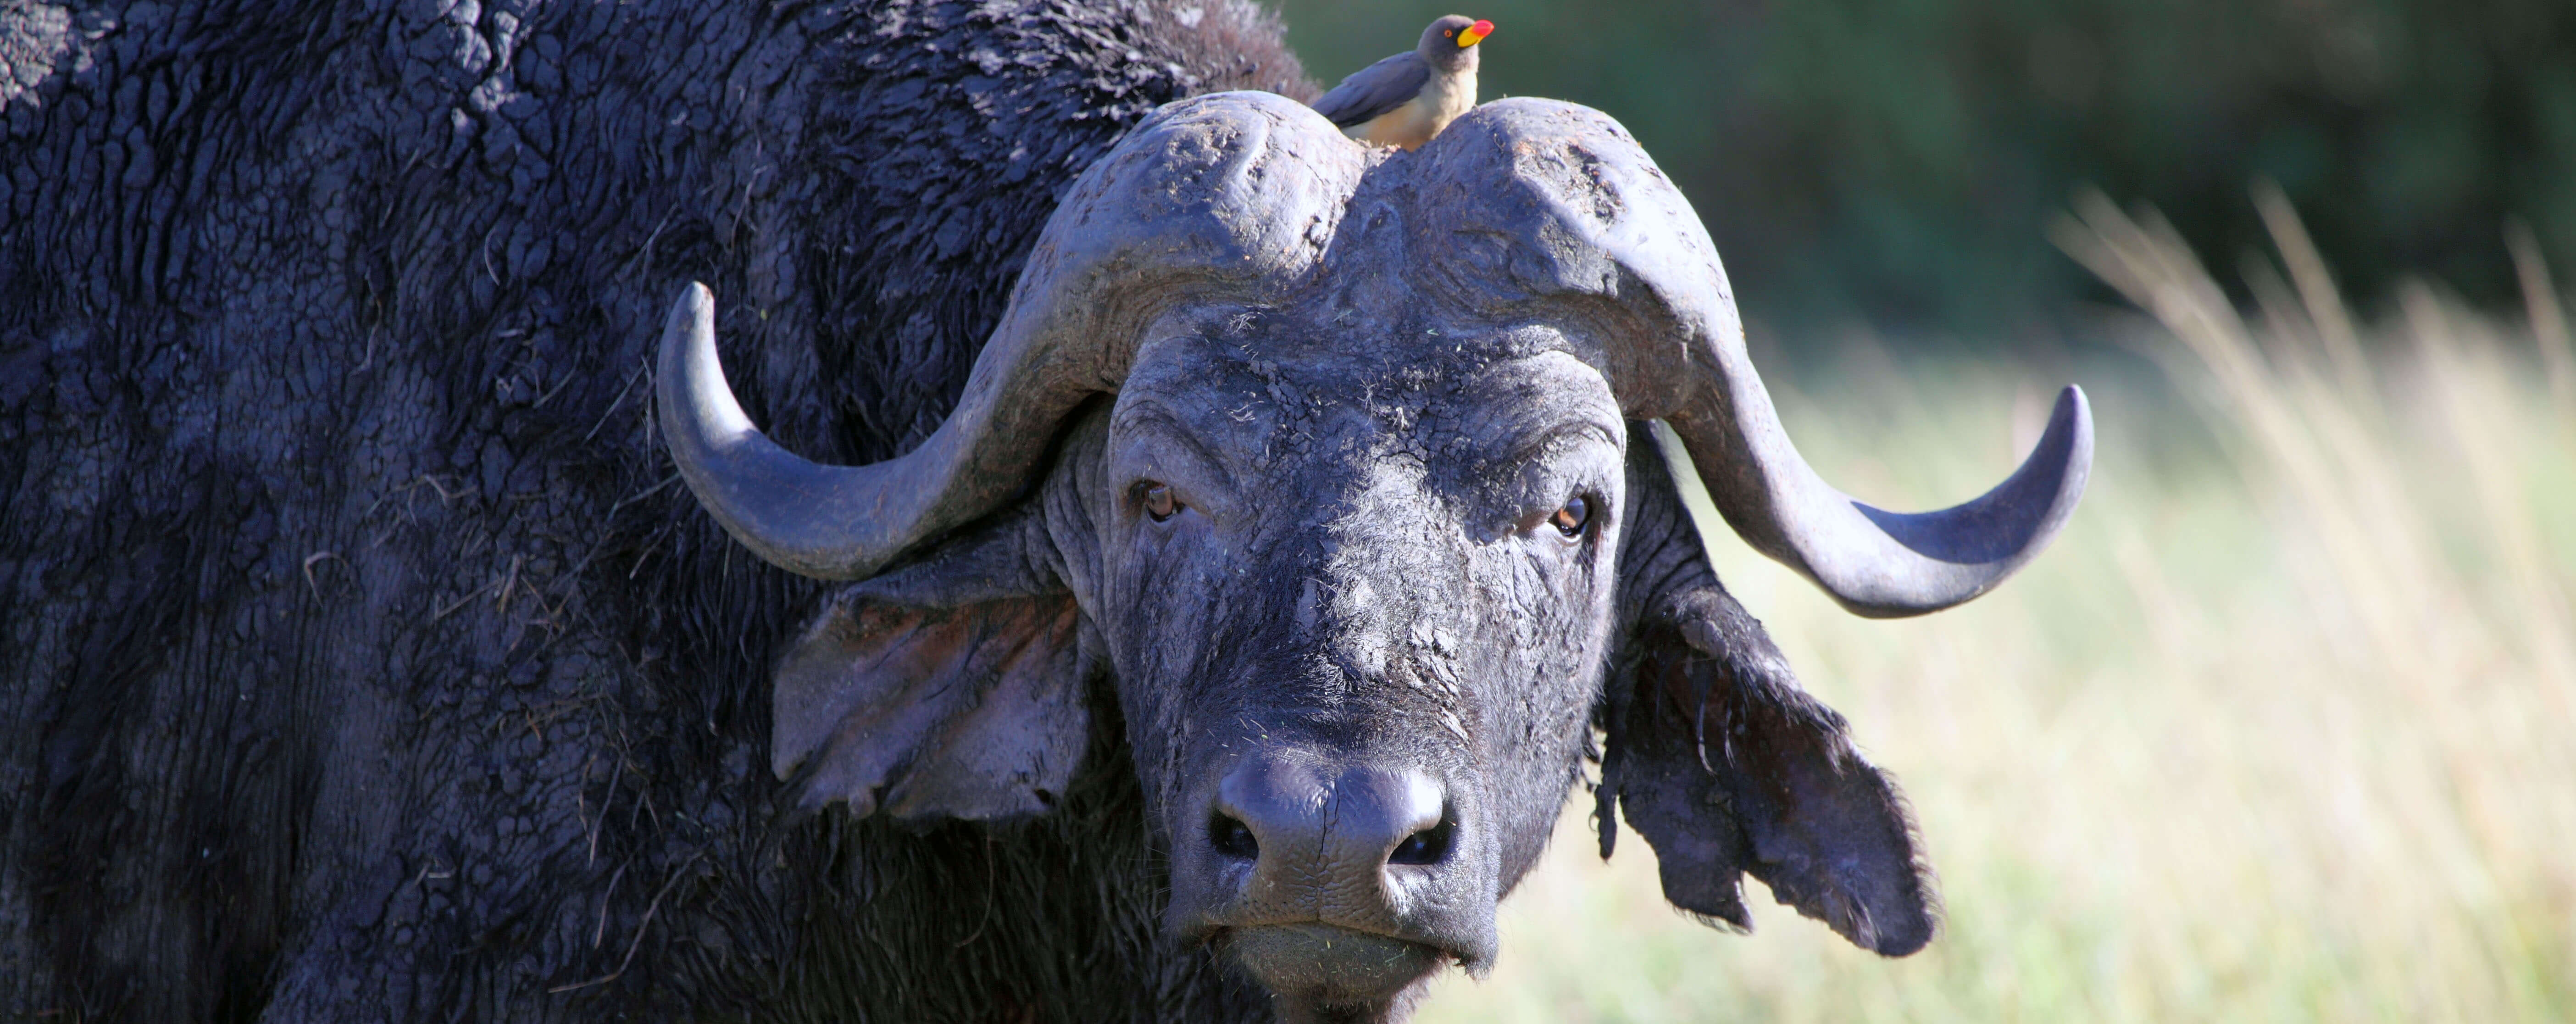 Cape buffalo, one of the big five safari animals